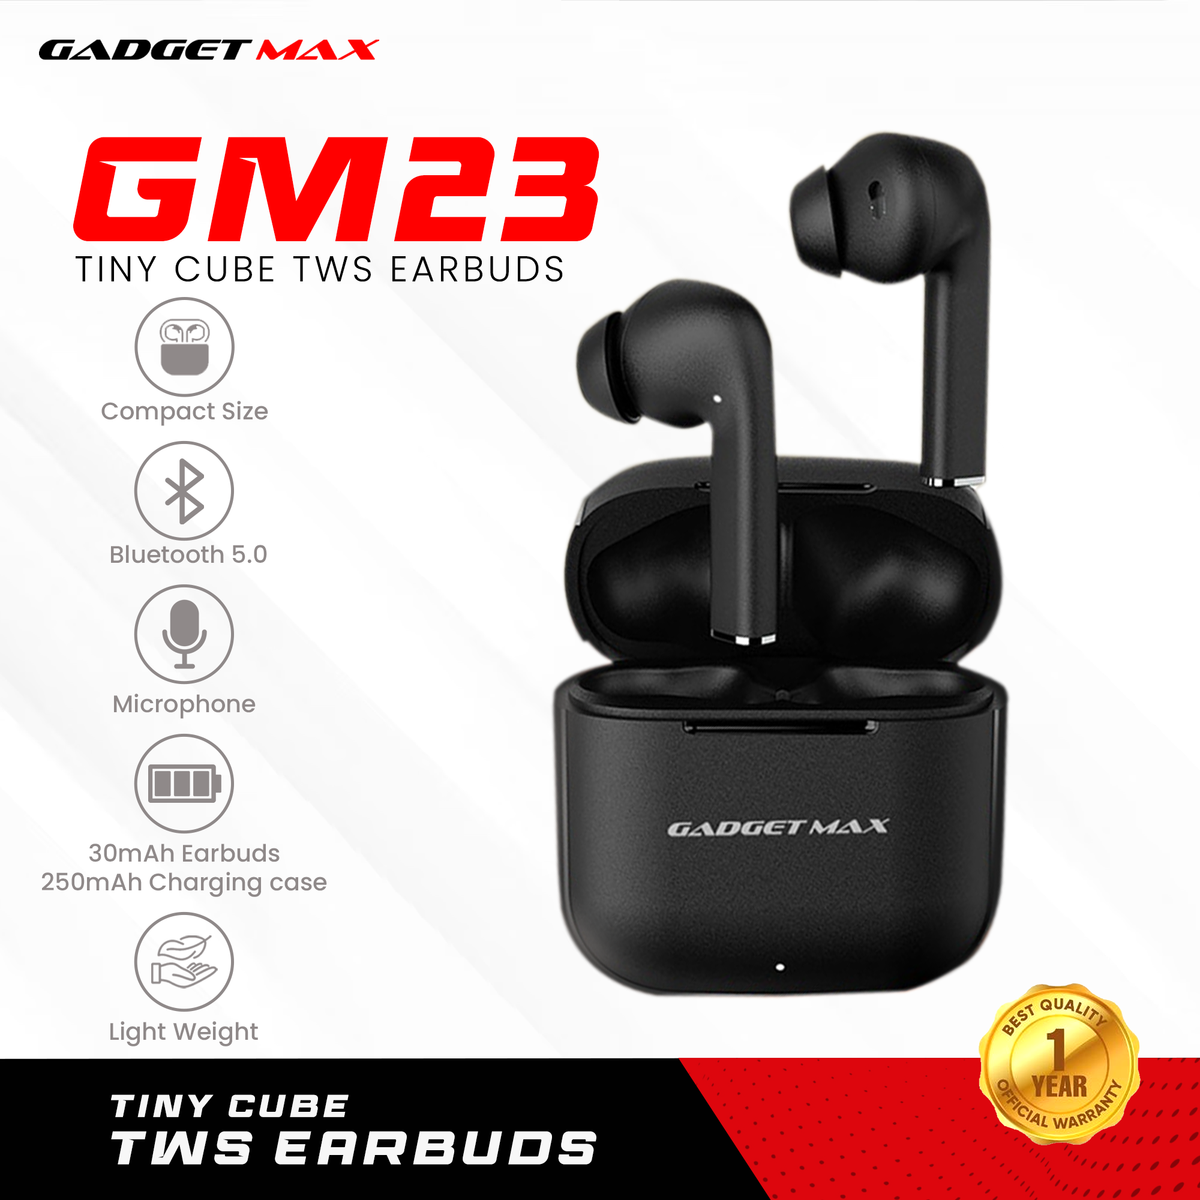 GADGET MAX GM23 TINY CUBE TWS EARBUDS-BLACK